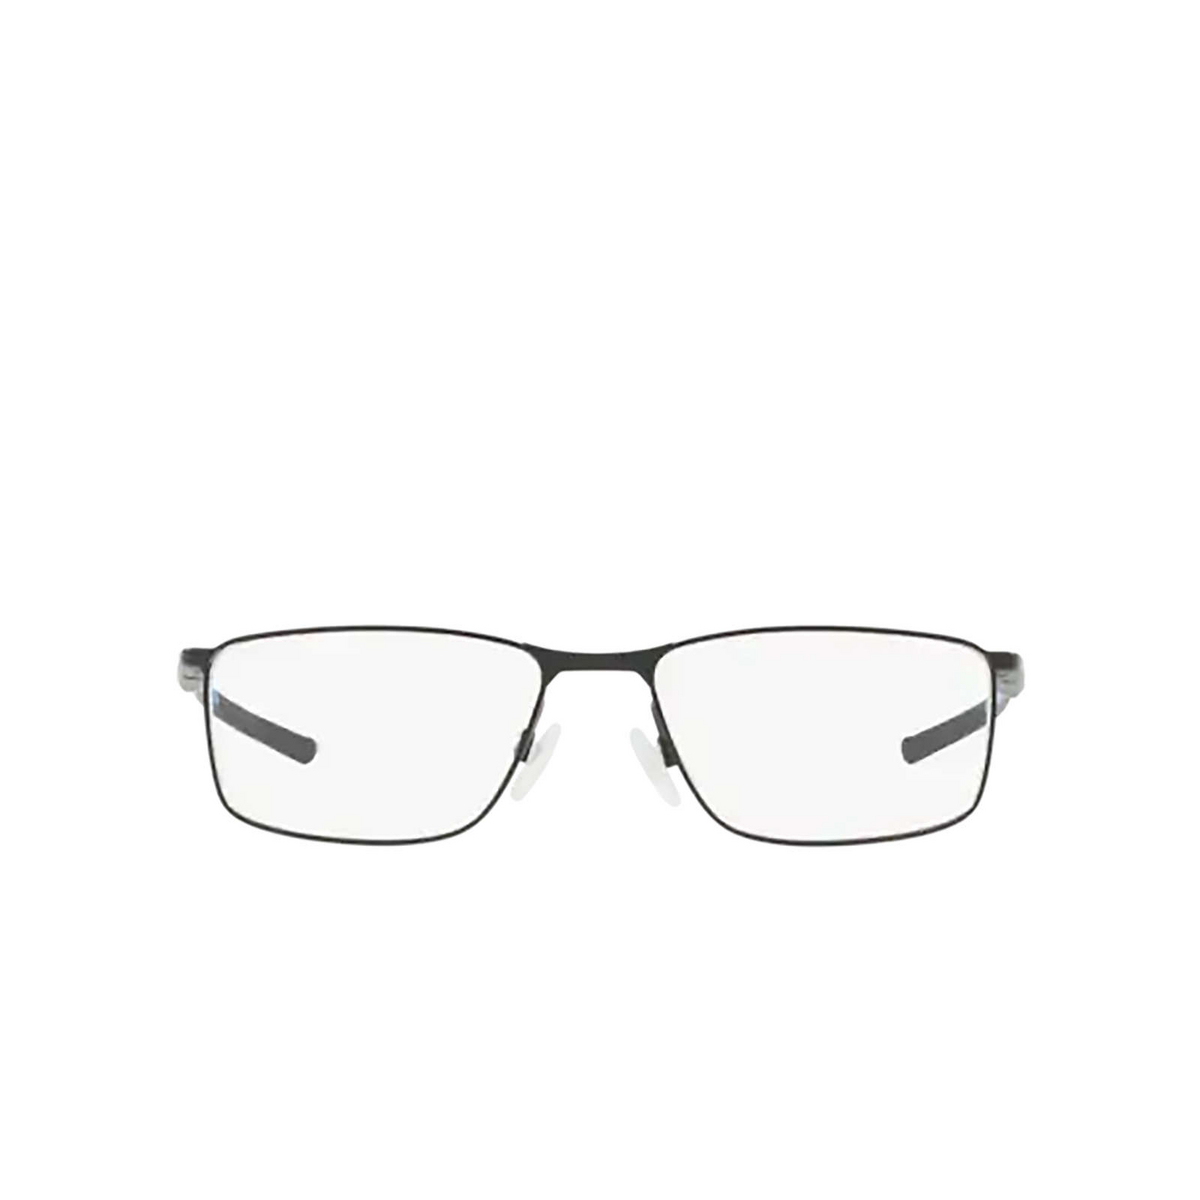 Oakley® Rectangle Eyeglasses: Socket 5.0 OX3217 color Satin Black 321704 - front view.